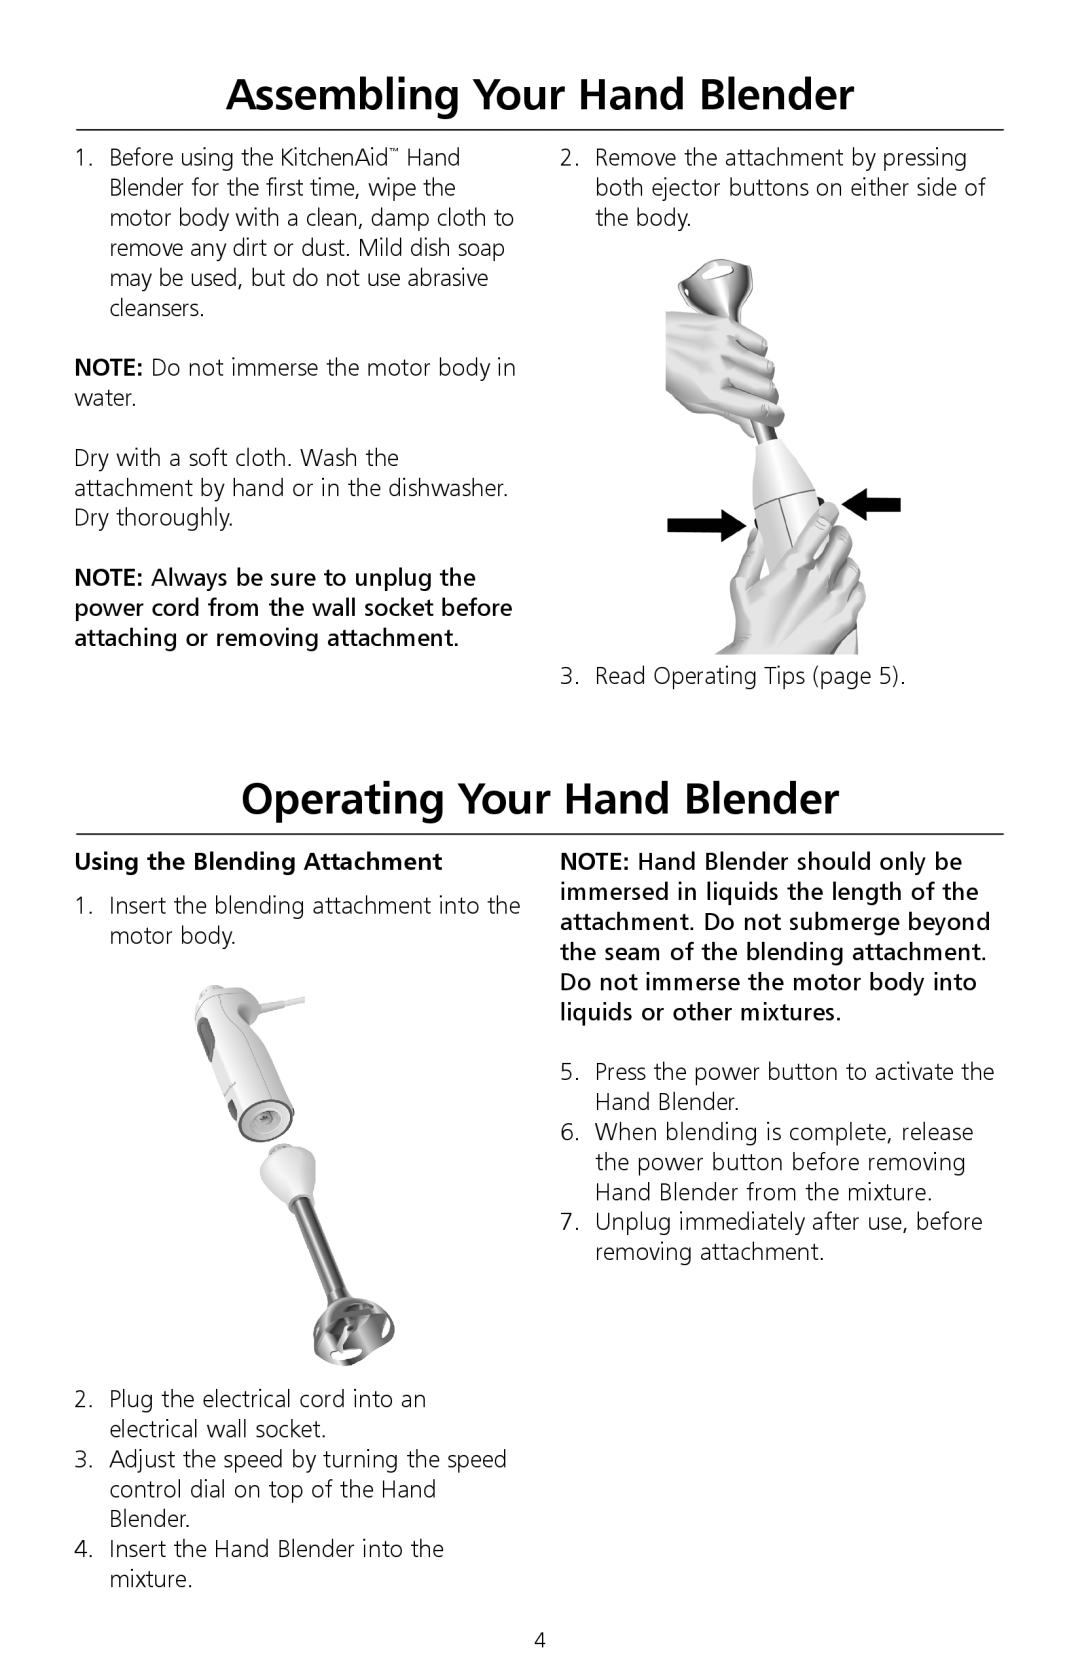 KitchenAid 5KHB100 manual Assembling Your Hand Blender, Operating Your Hand Blender, Using the Blending Attachment 